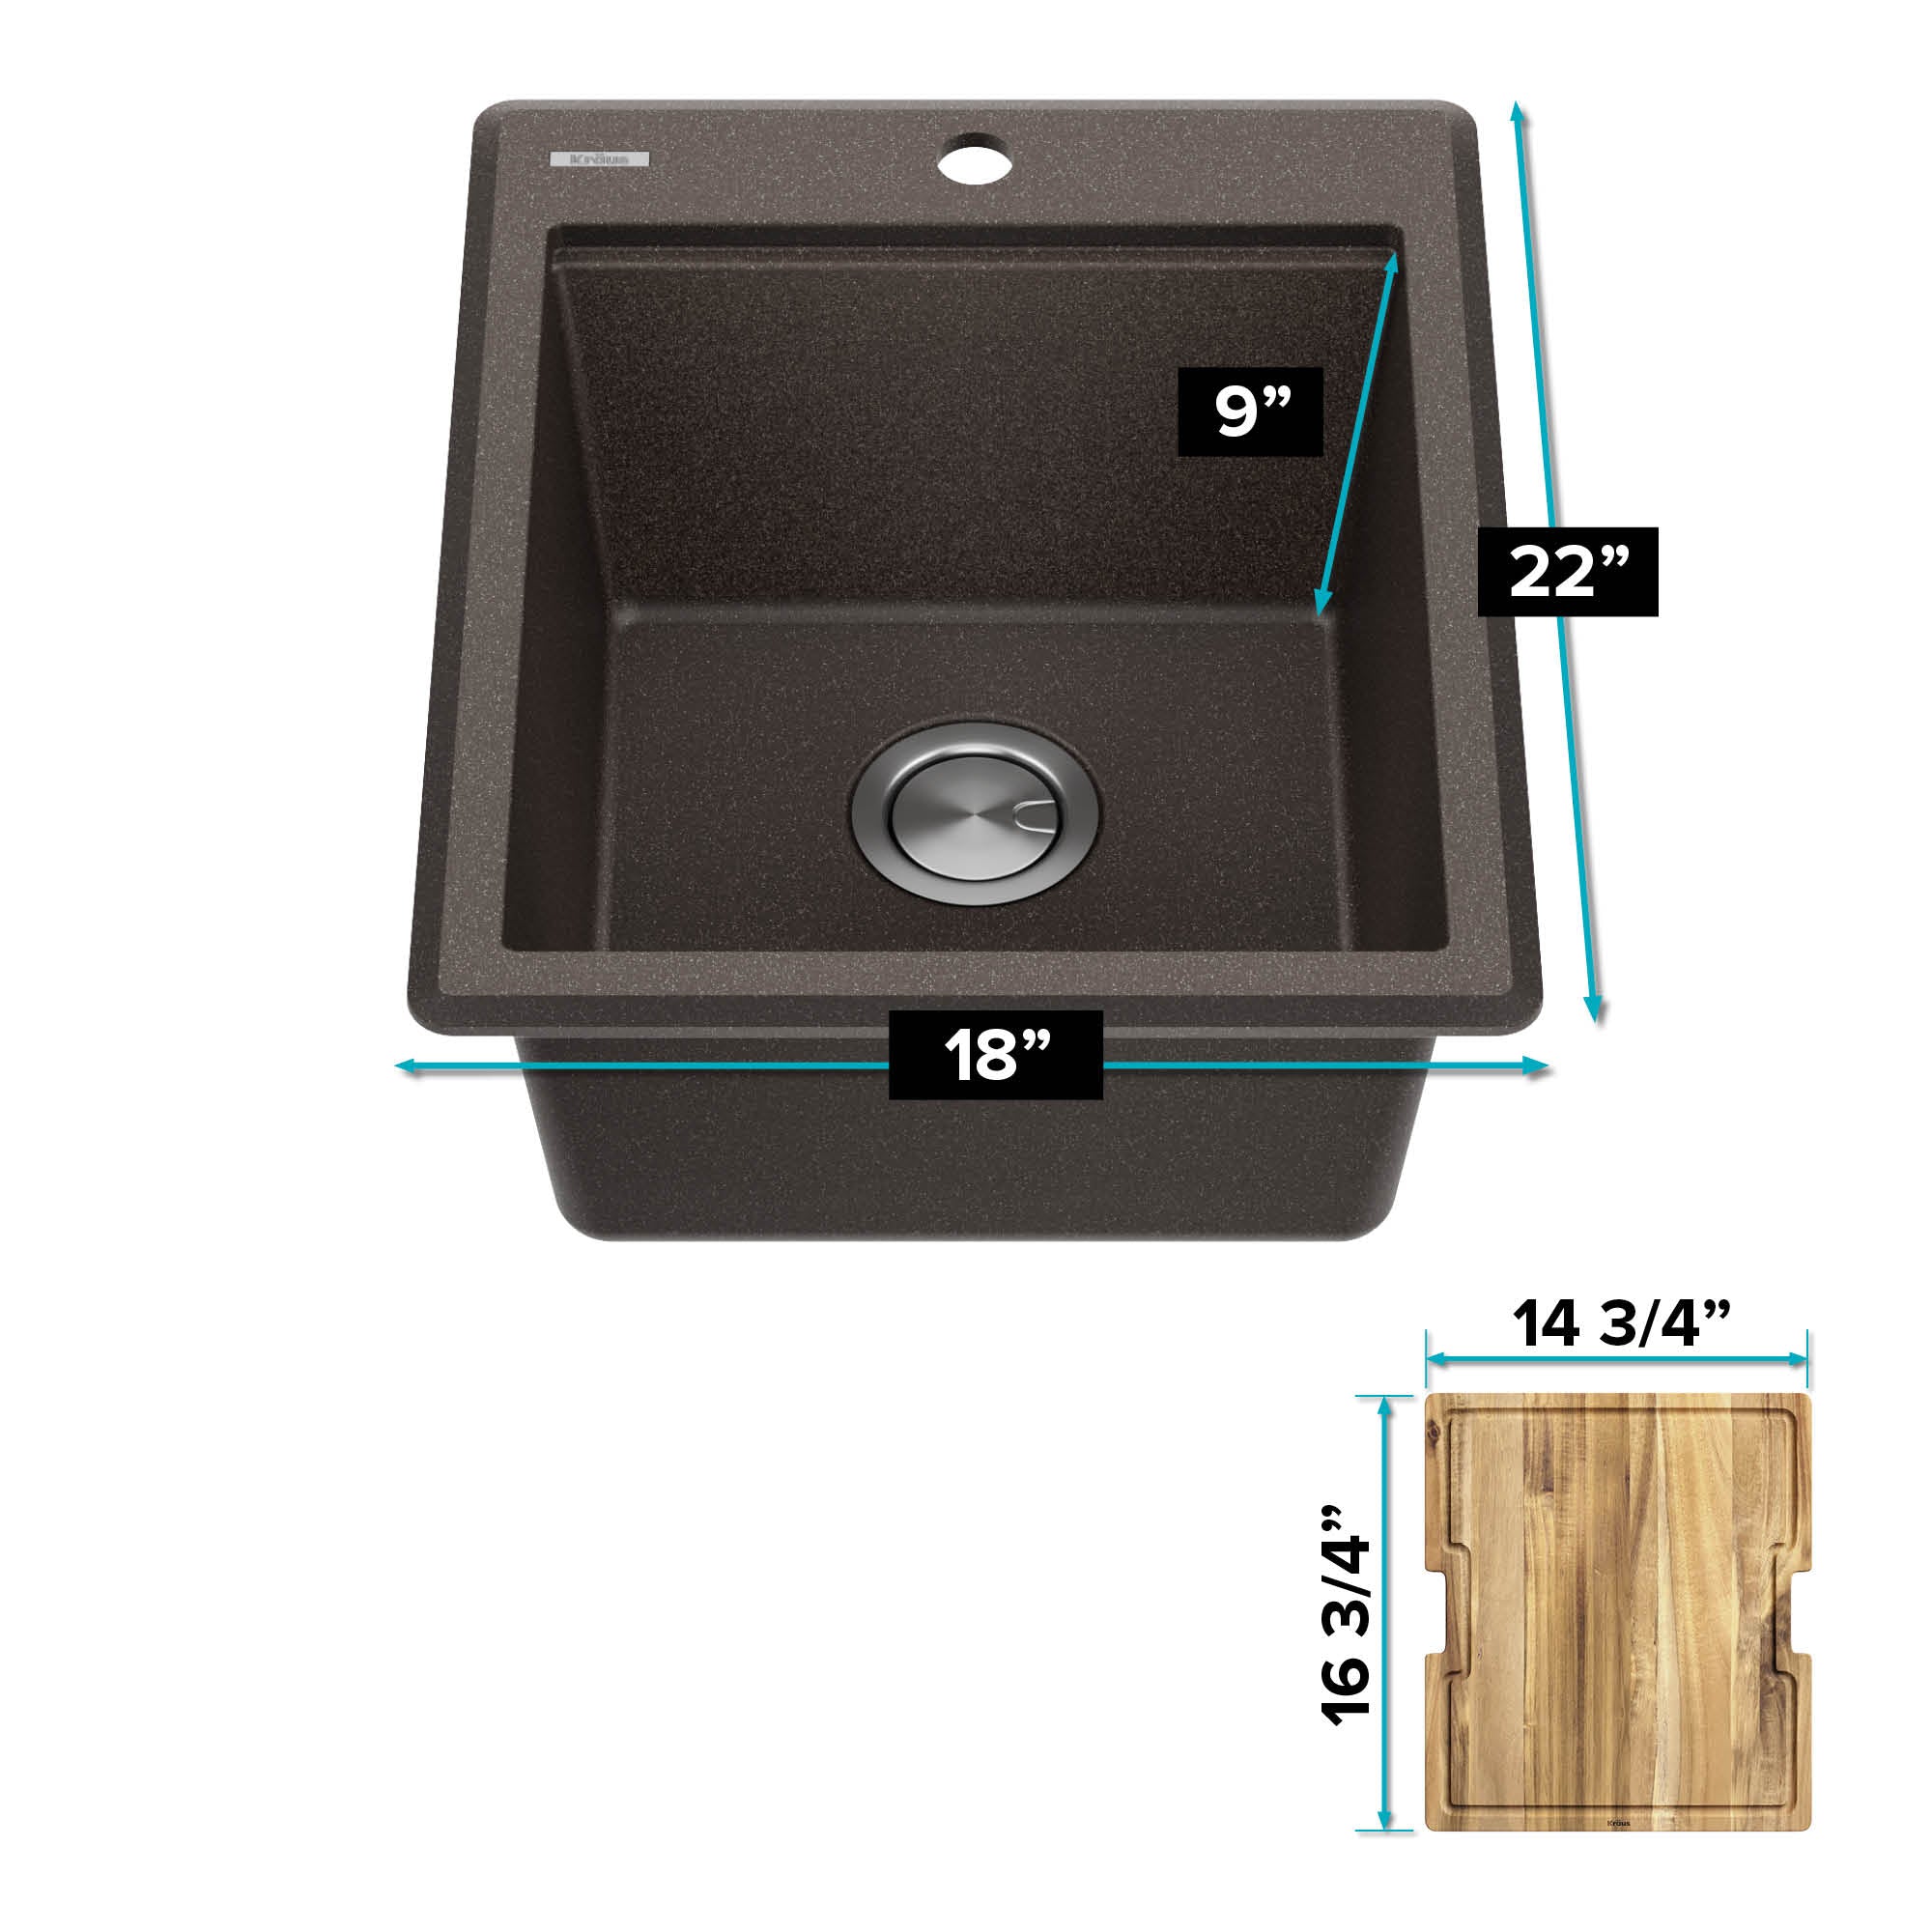 KRAUS 18” Drop-In Granite Composite Workstation Kitchen Bar Sink in Metallic Brown-DirectSinks